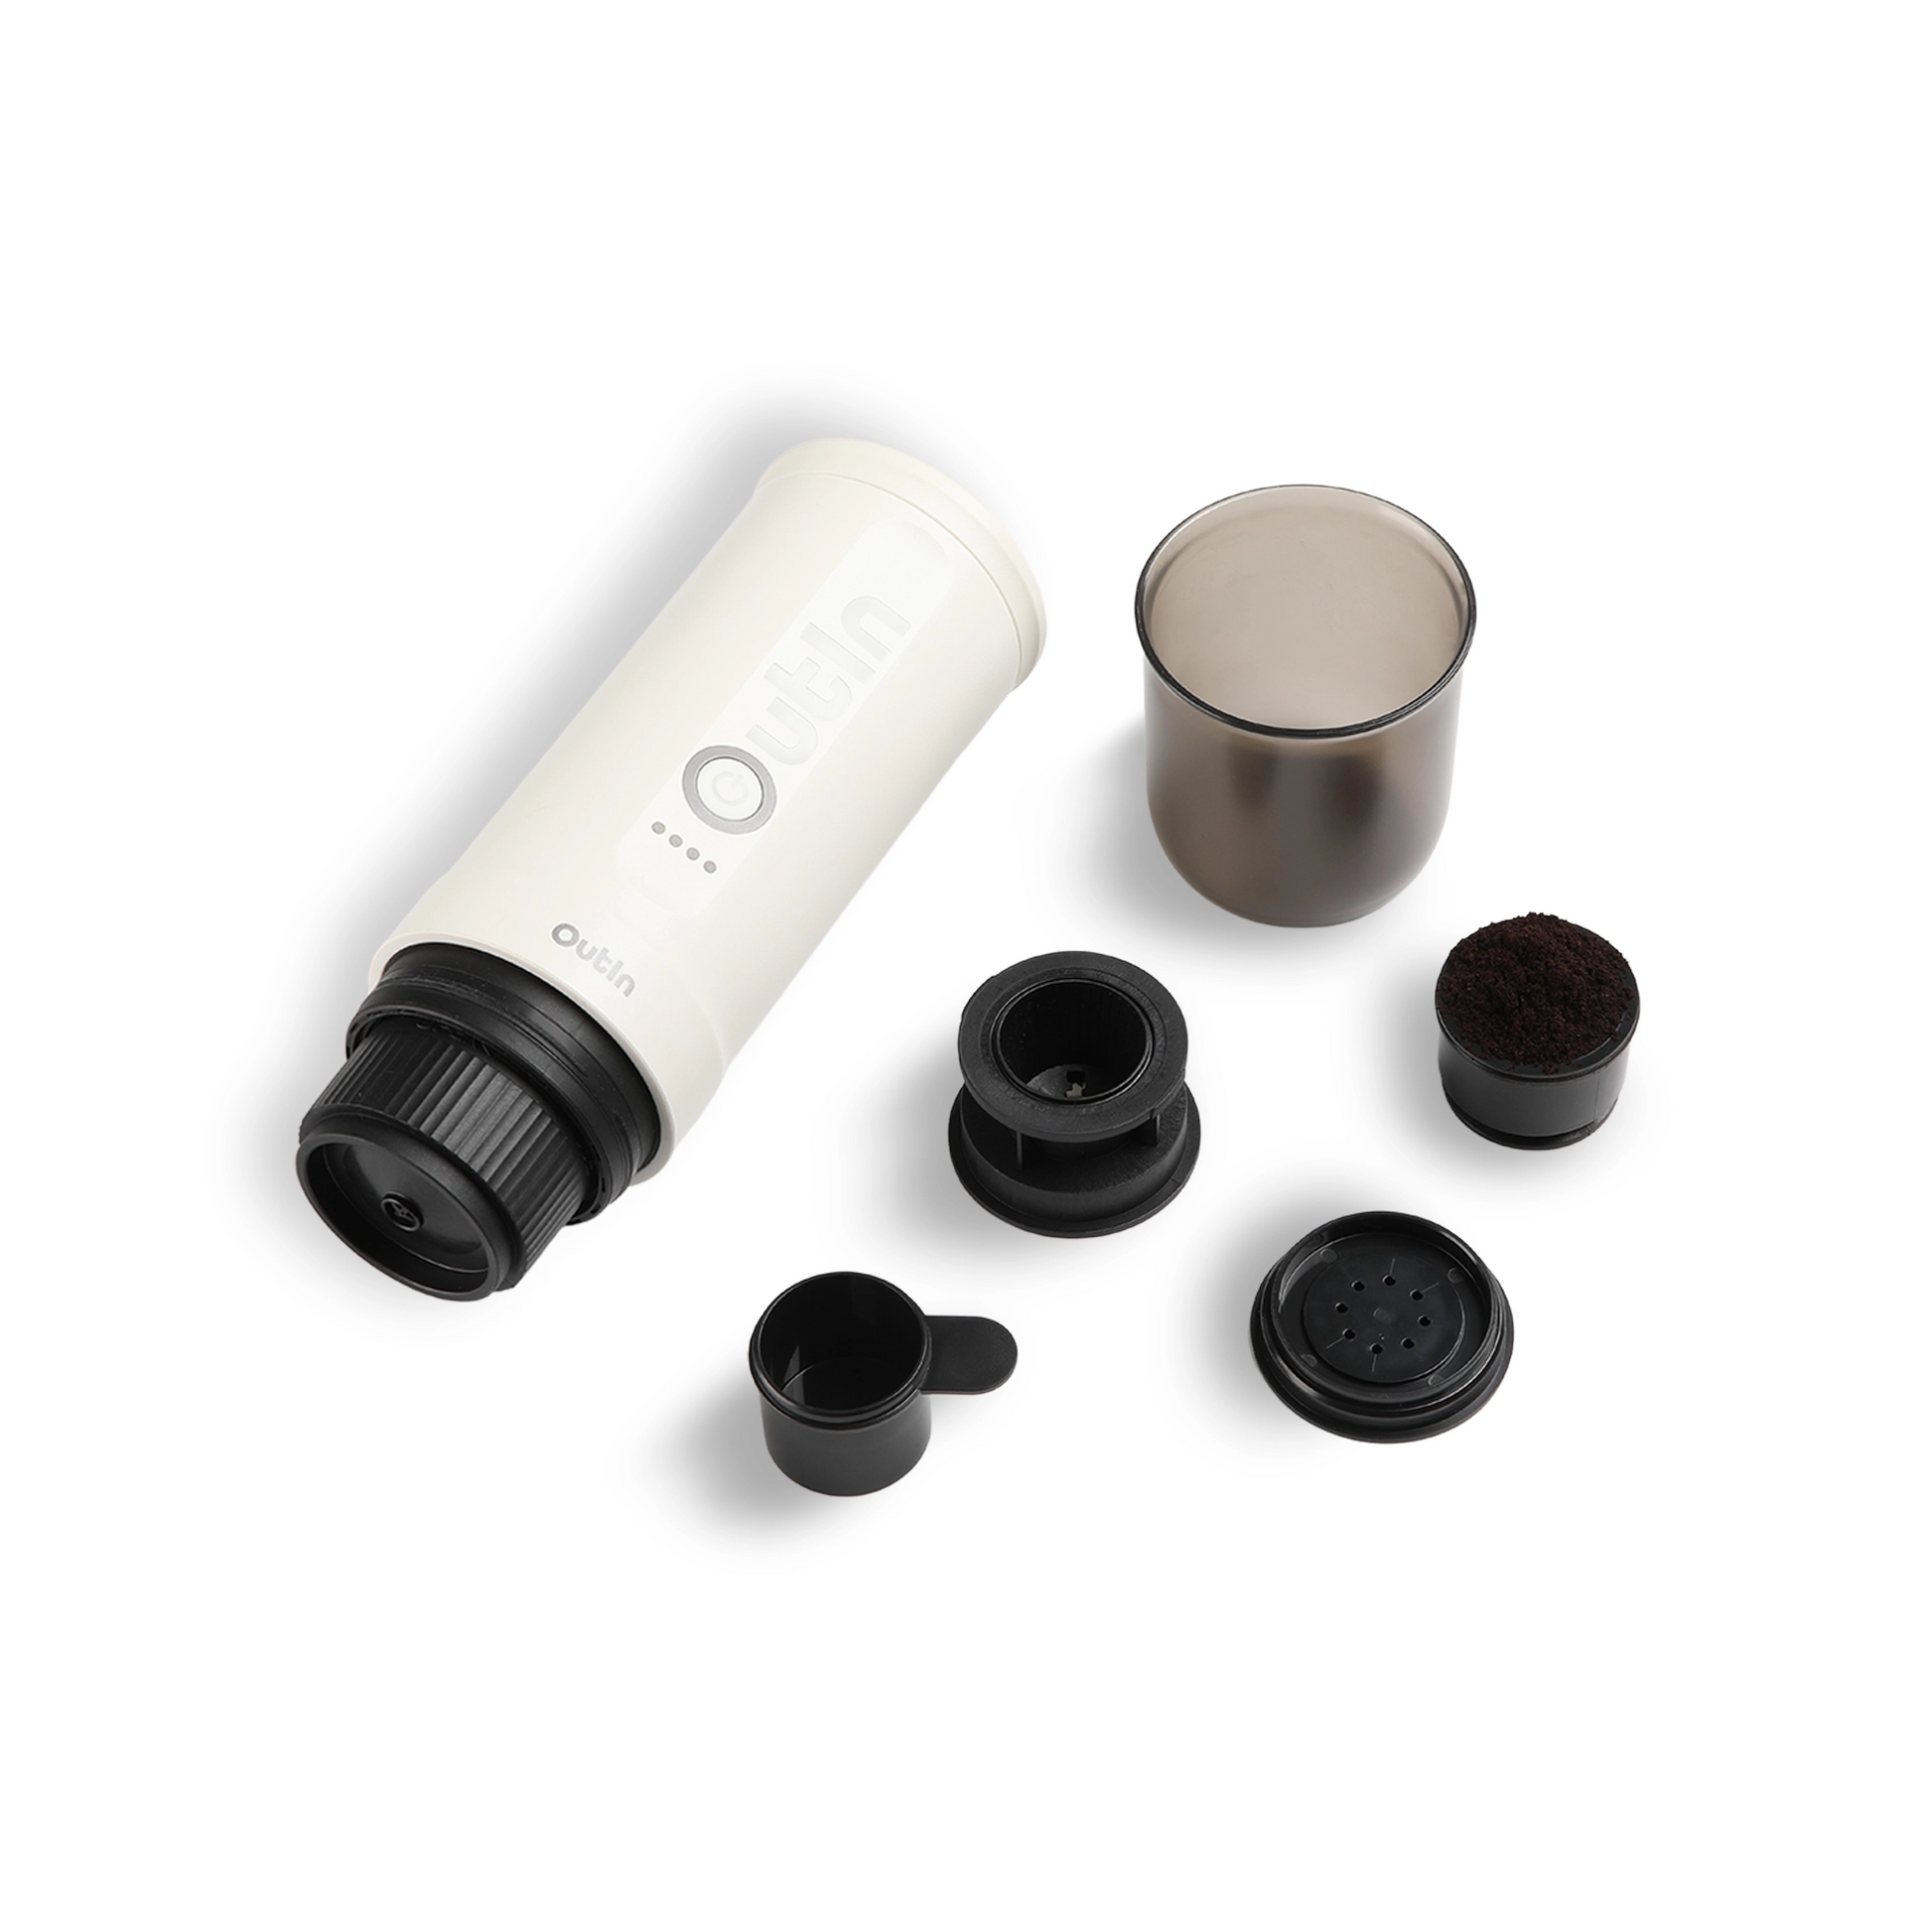 The OUTIN Nano - Portable Espresso Maker Review 